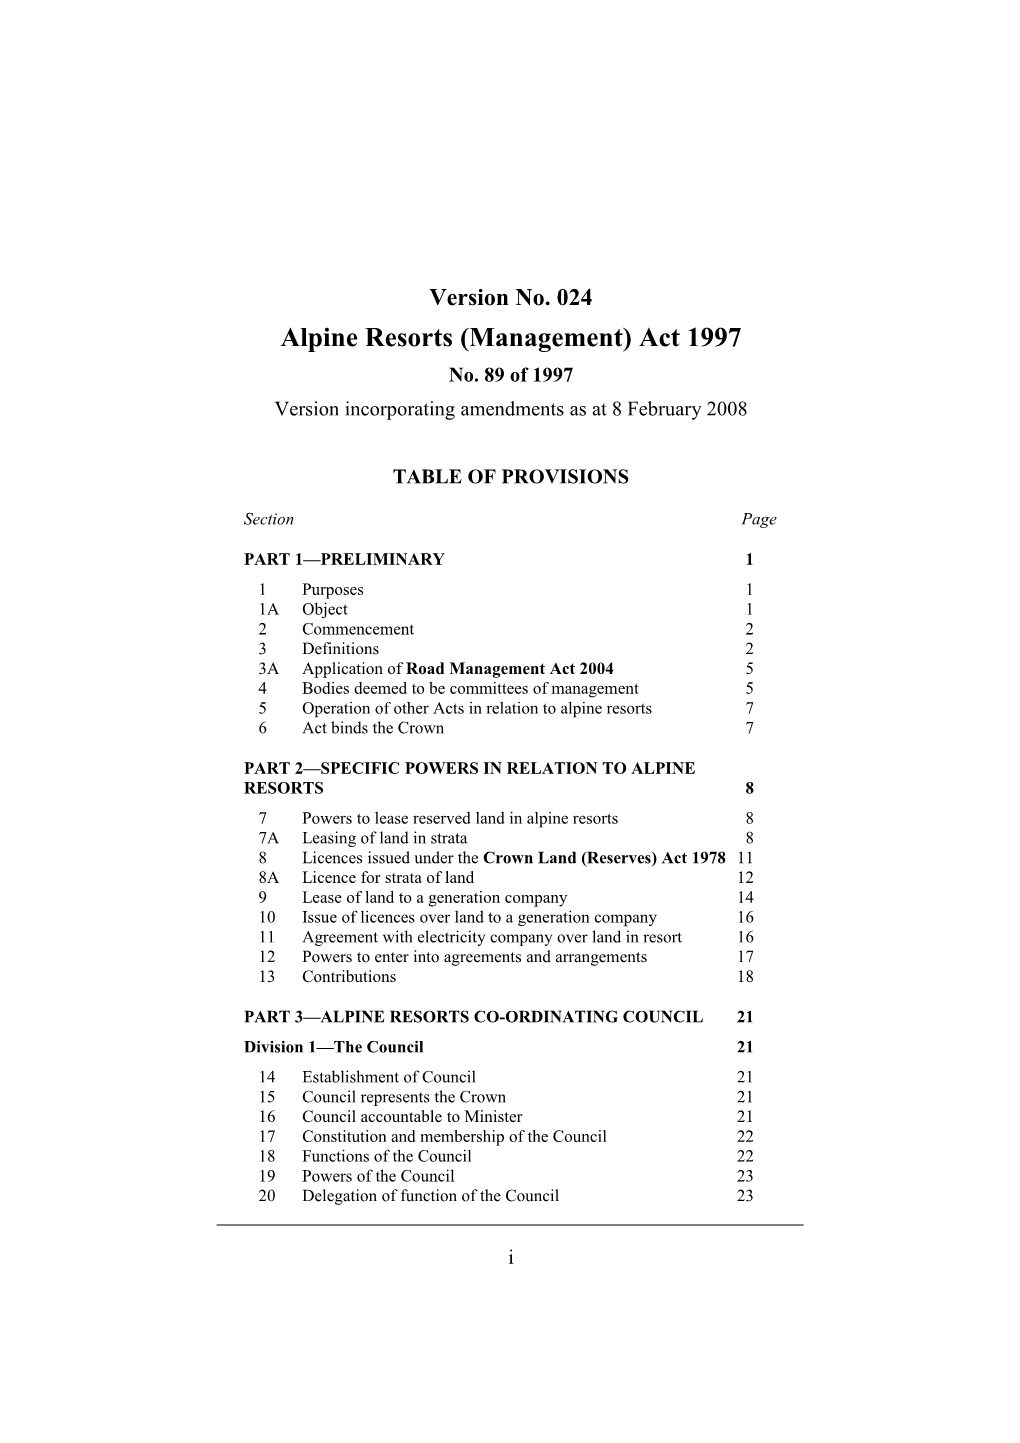 Alpine Resorts (Management) Act 1997